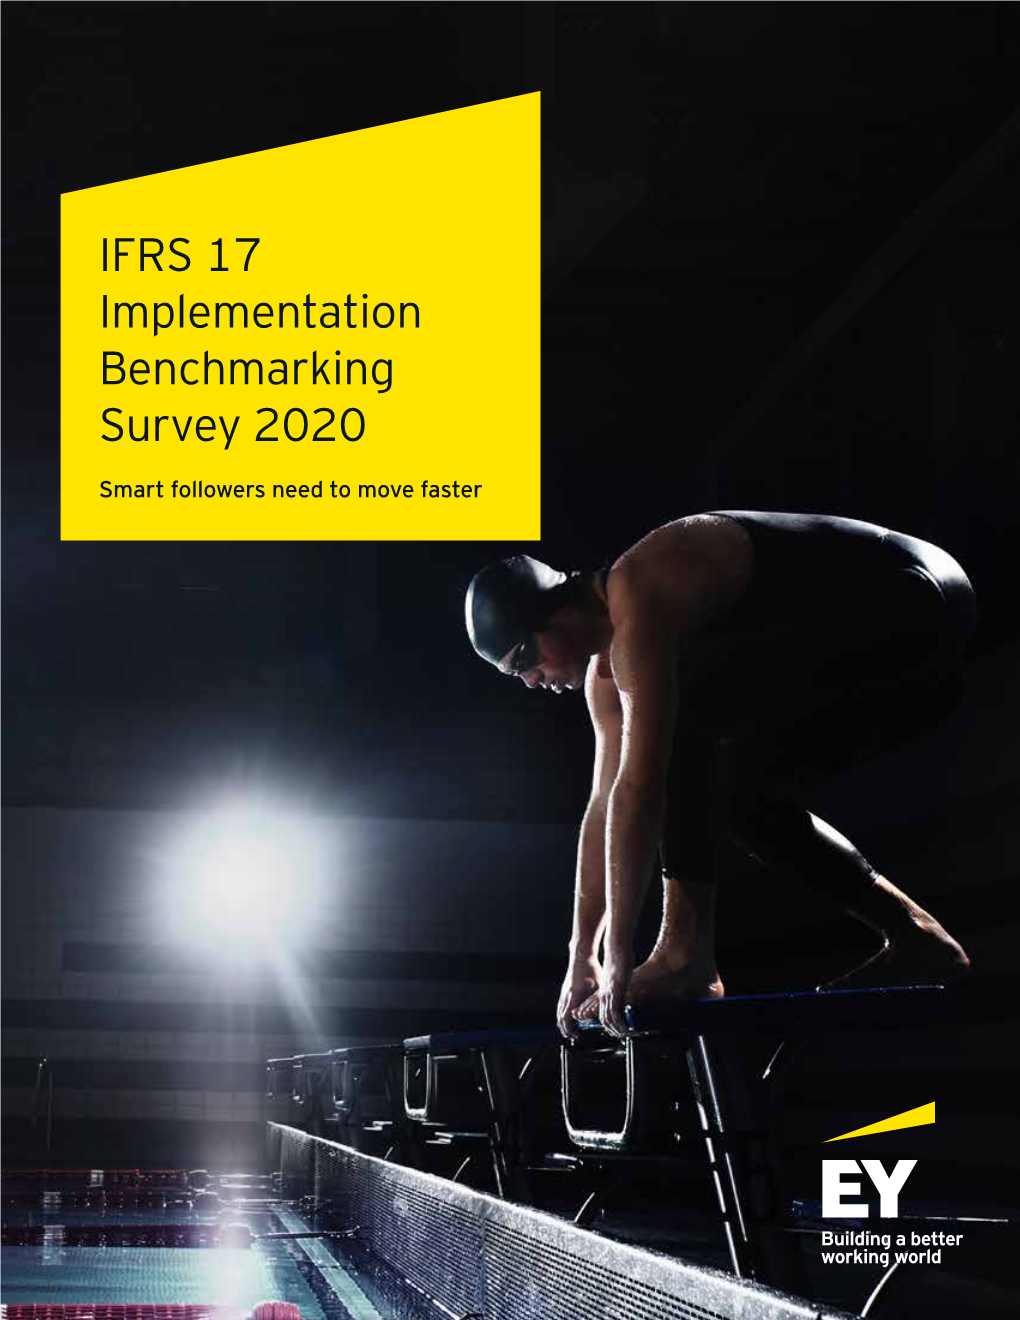 IFRS 17 Implementation Benchmarking Survey 2020